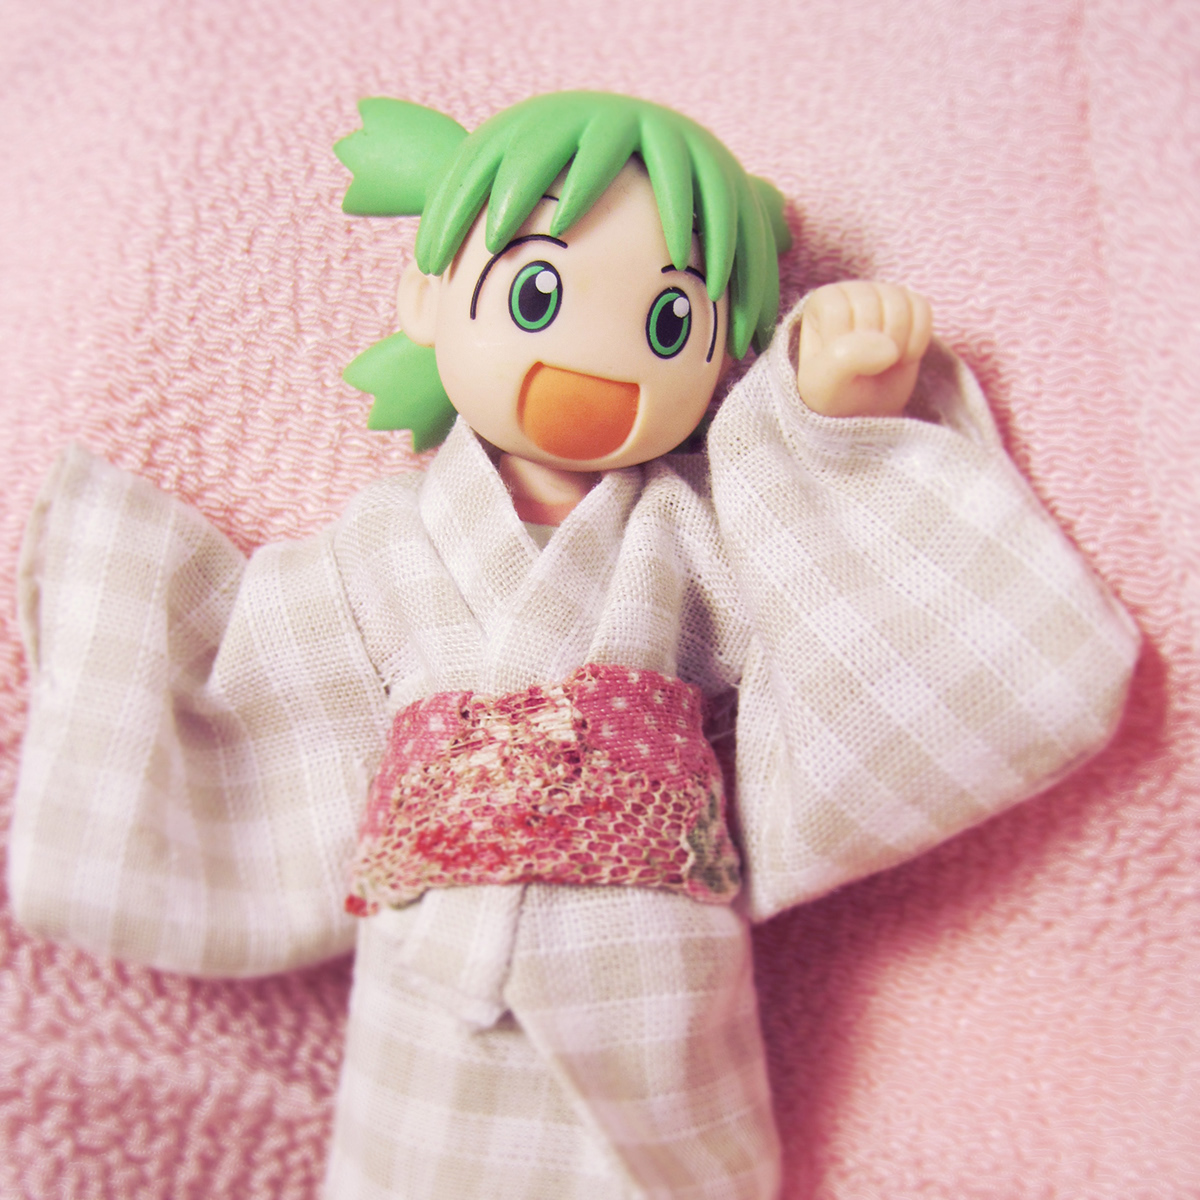 toy doll anime manga figurine japanese sewing